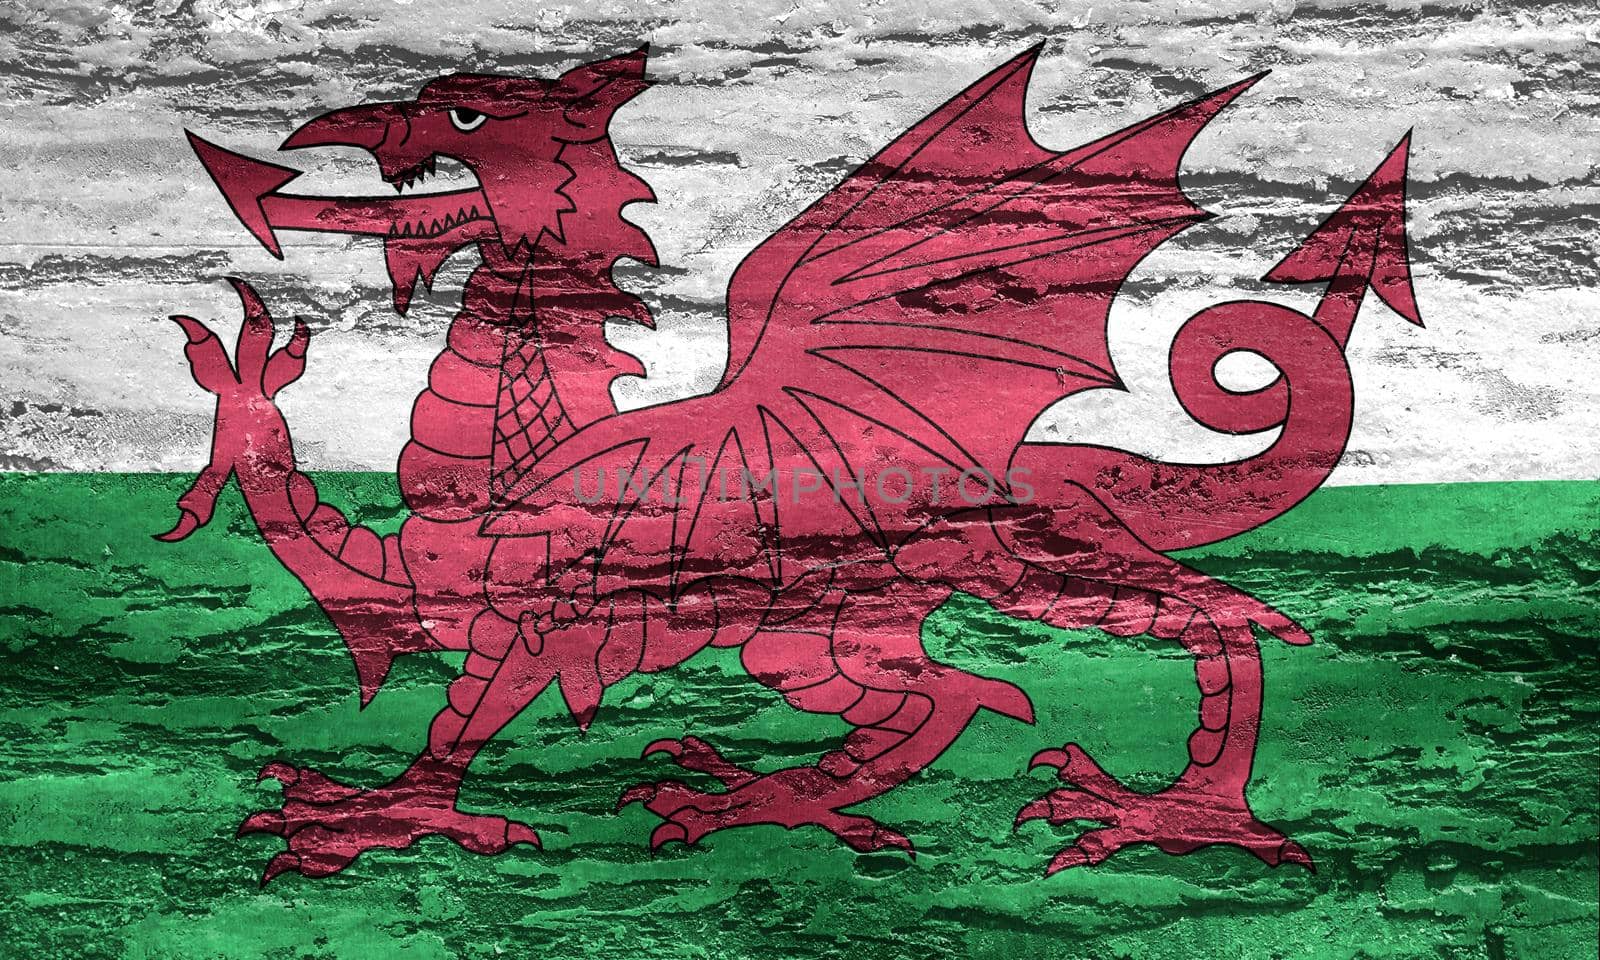 Wales flag - realistic waving fabric flag